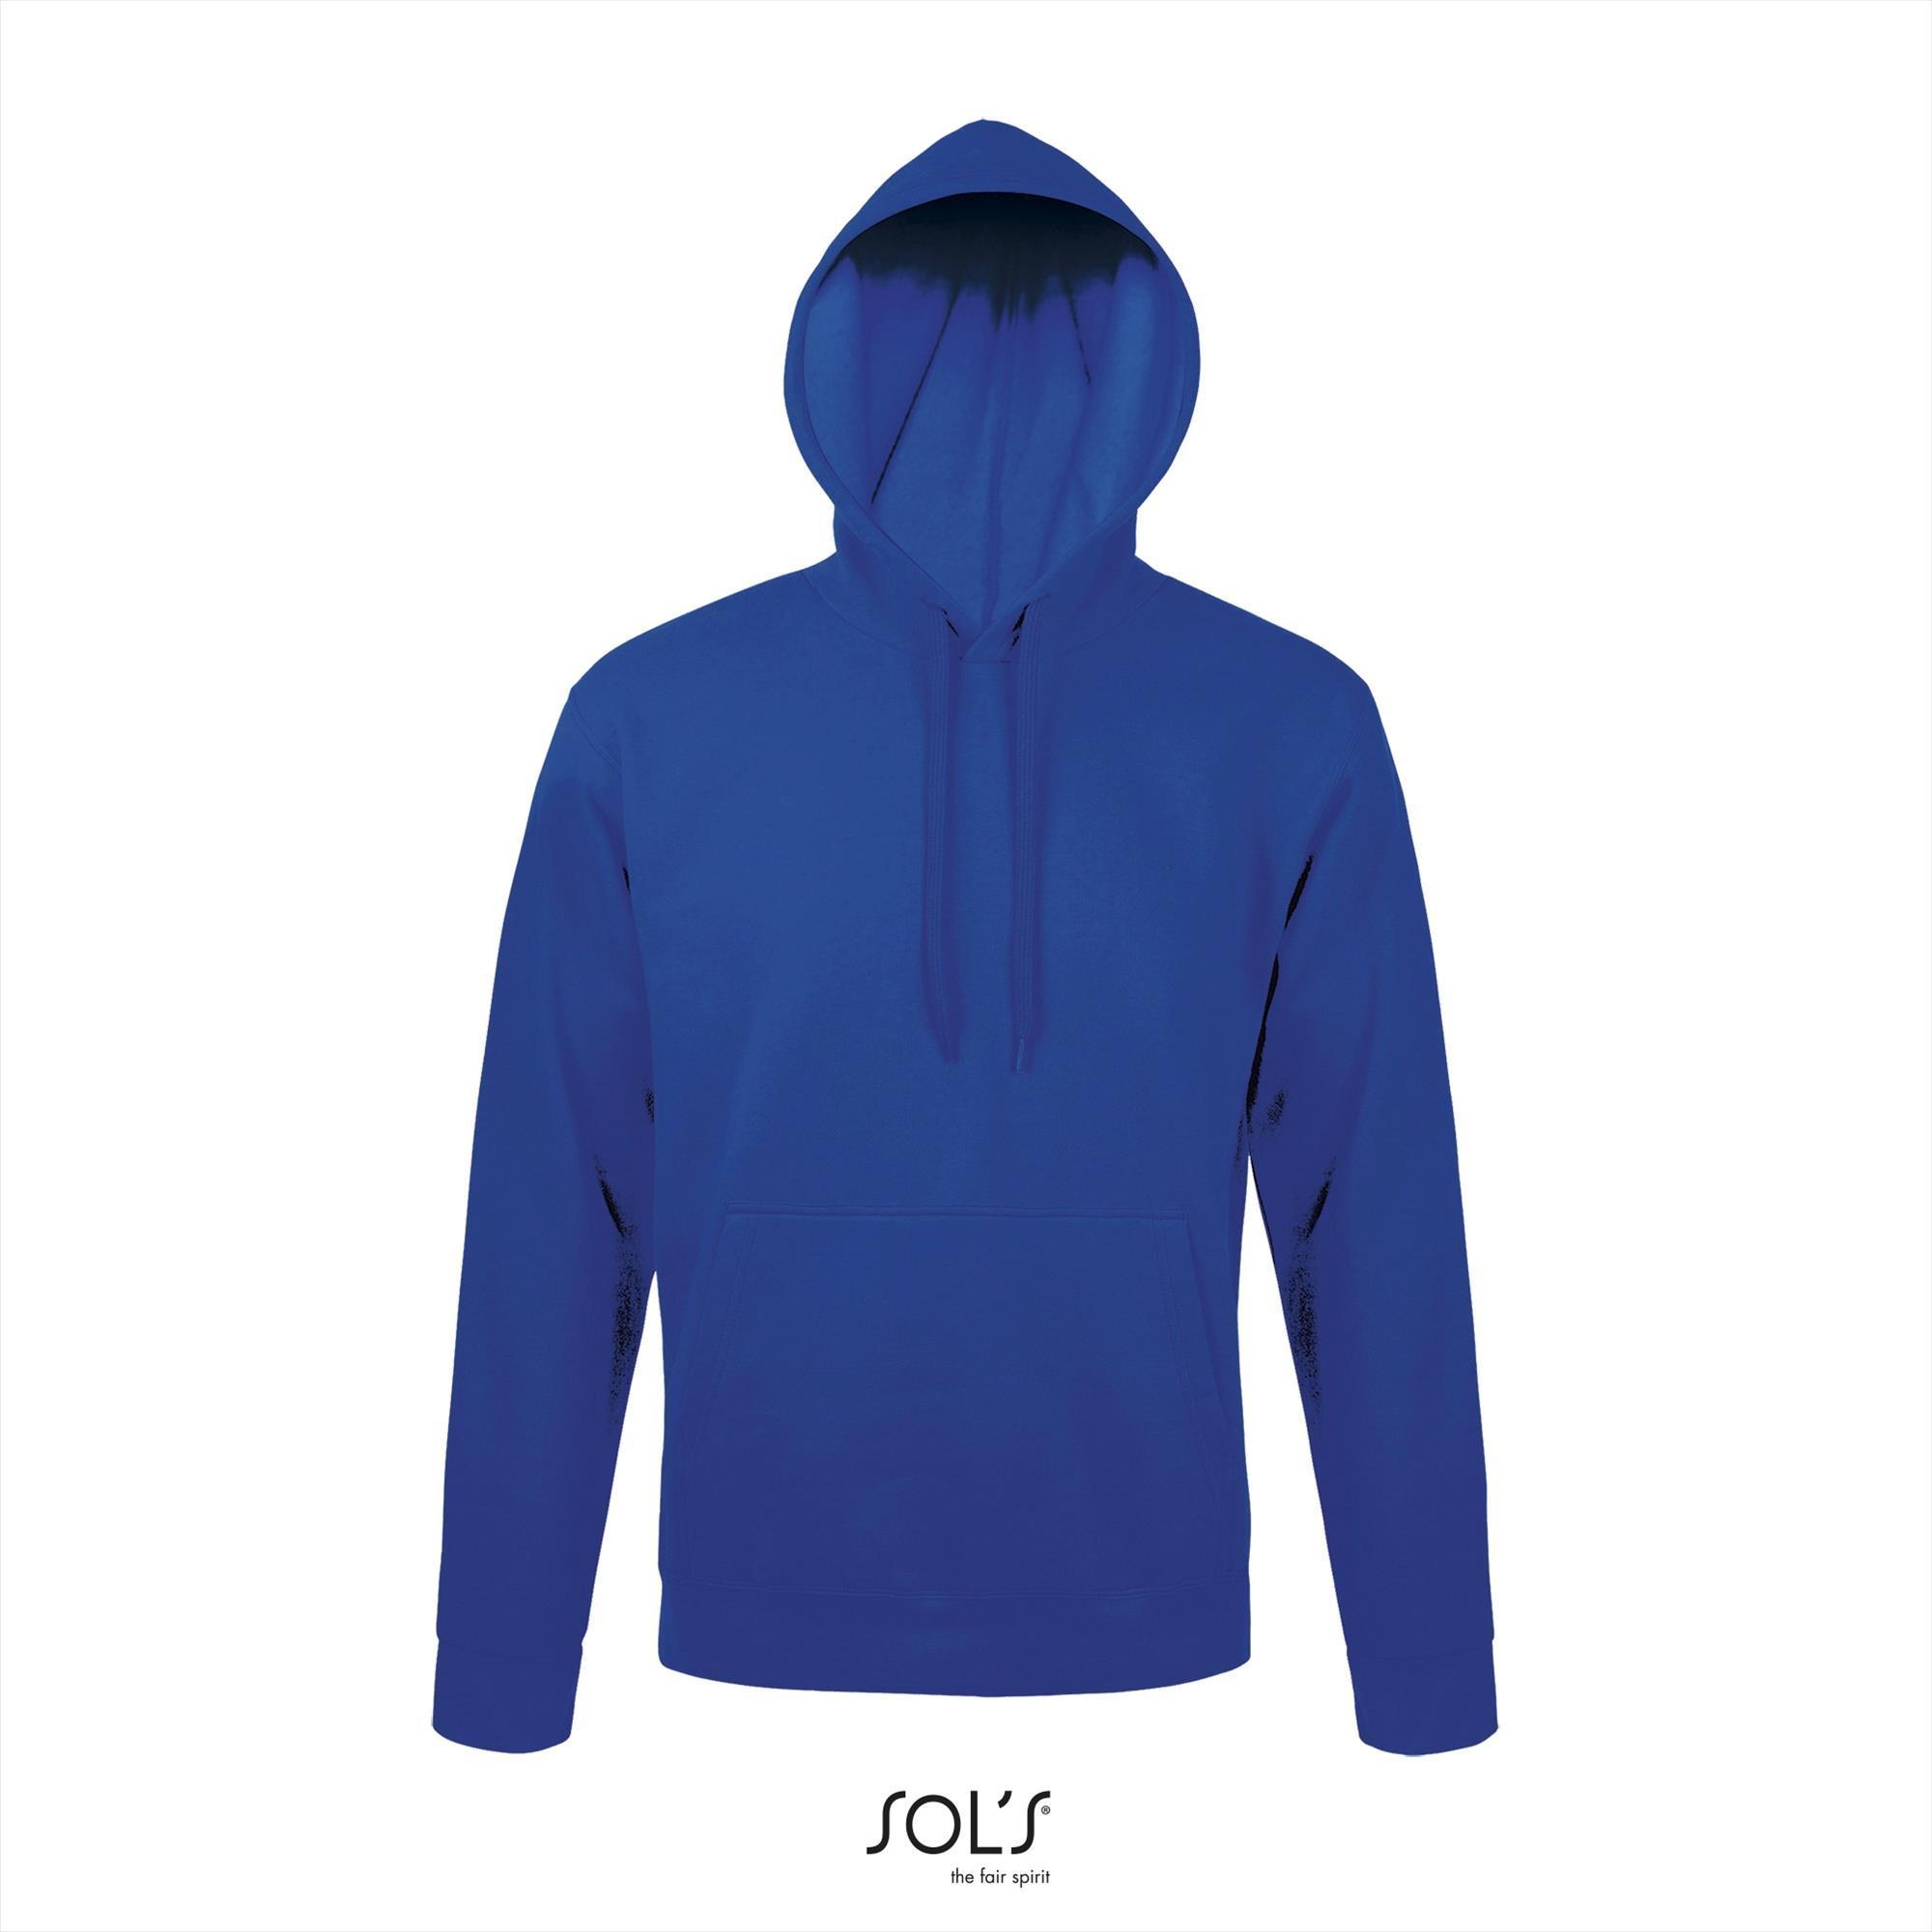 Royal blauwe hooded sweater voor mannen unisex blauw